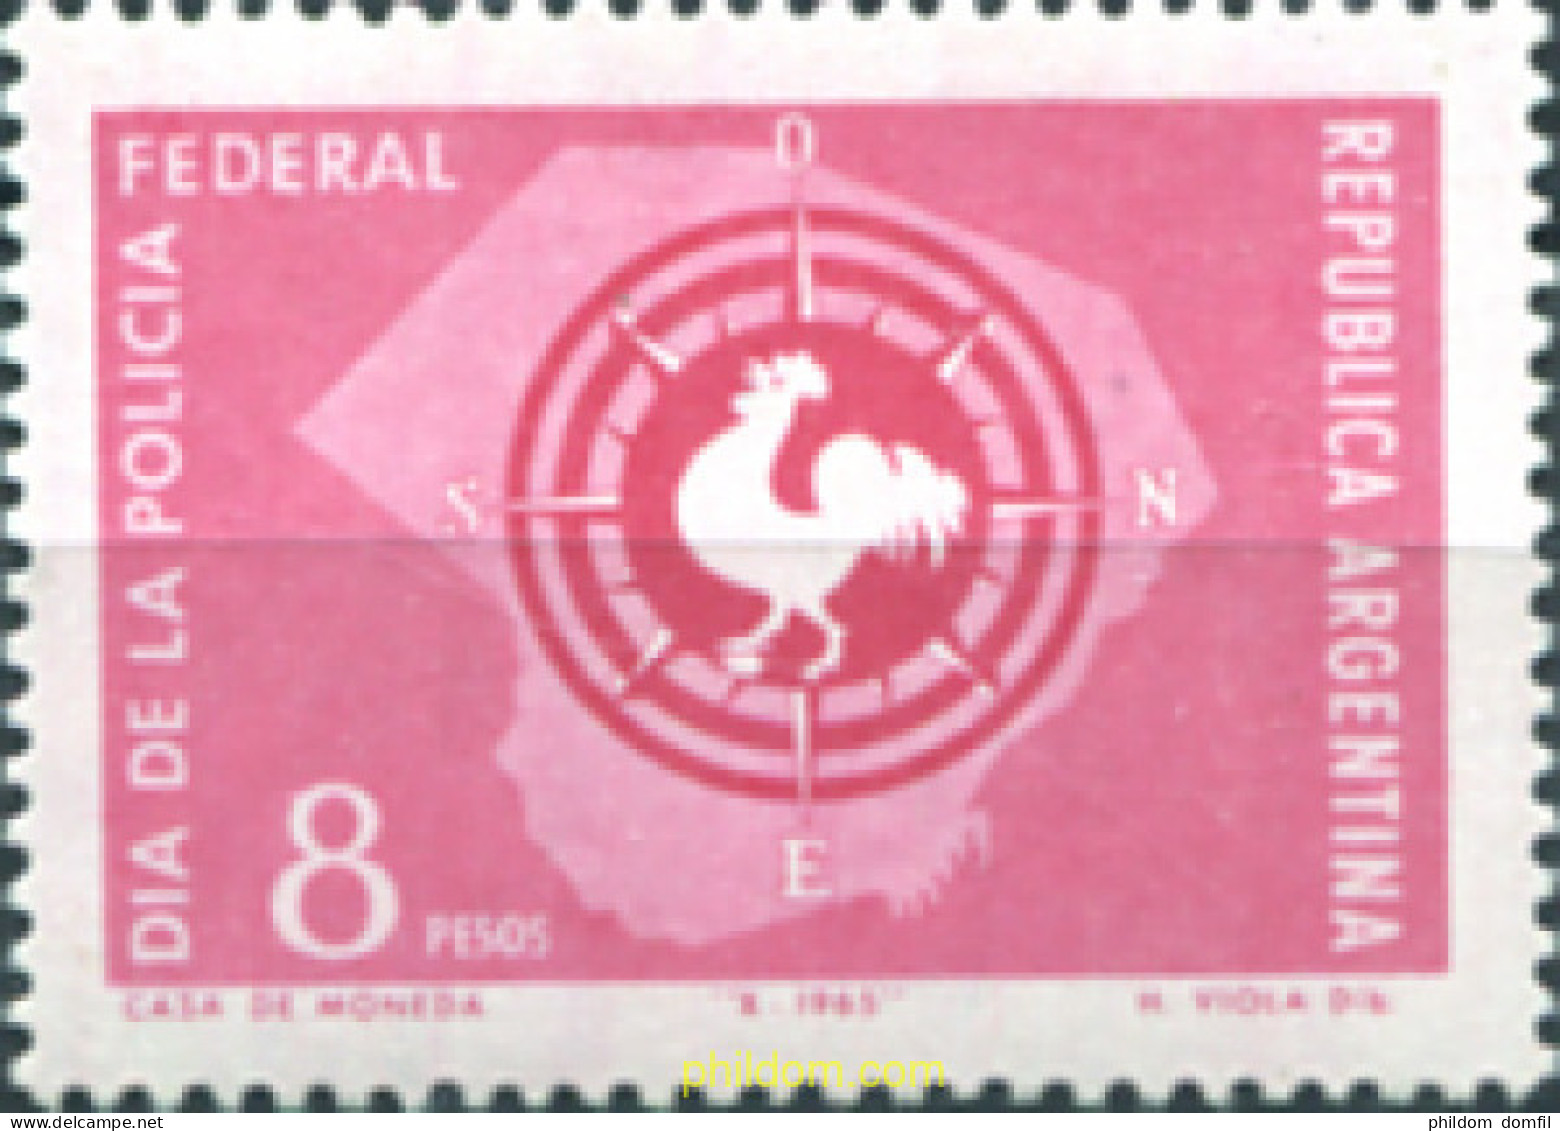 727077 MNH ARGENTINA 1965 DIA DE LA POLICIA FEDERAL - Unused Stamps